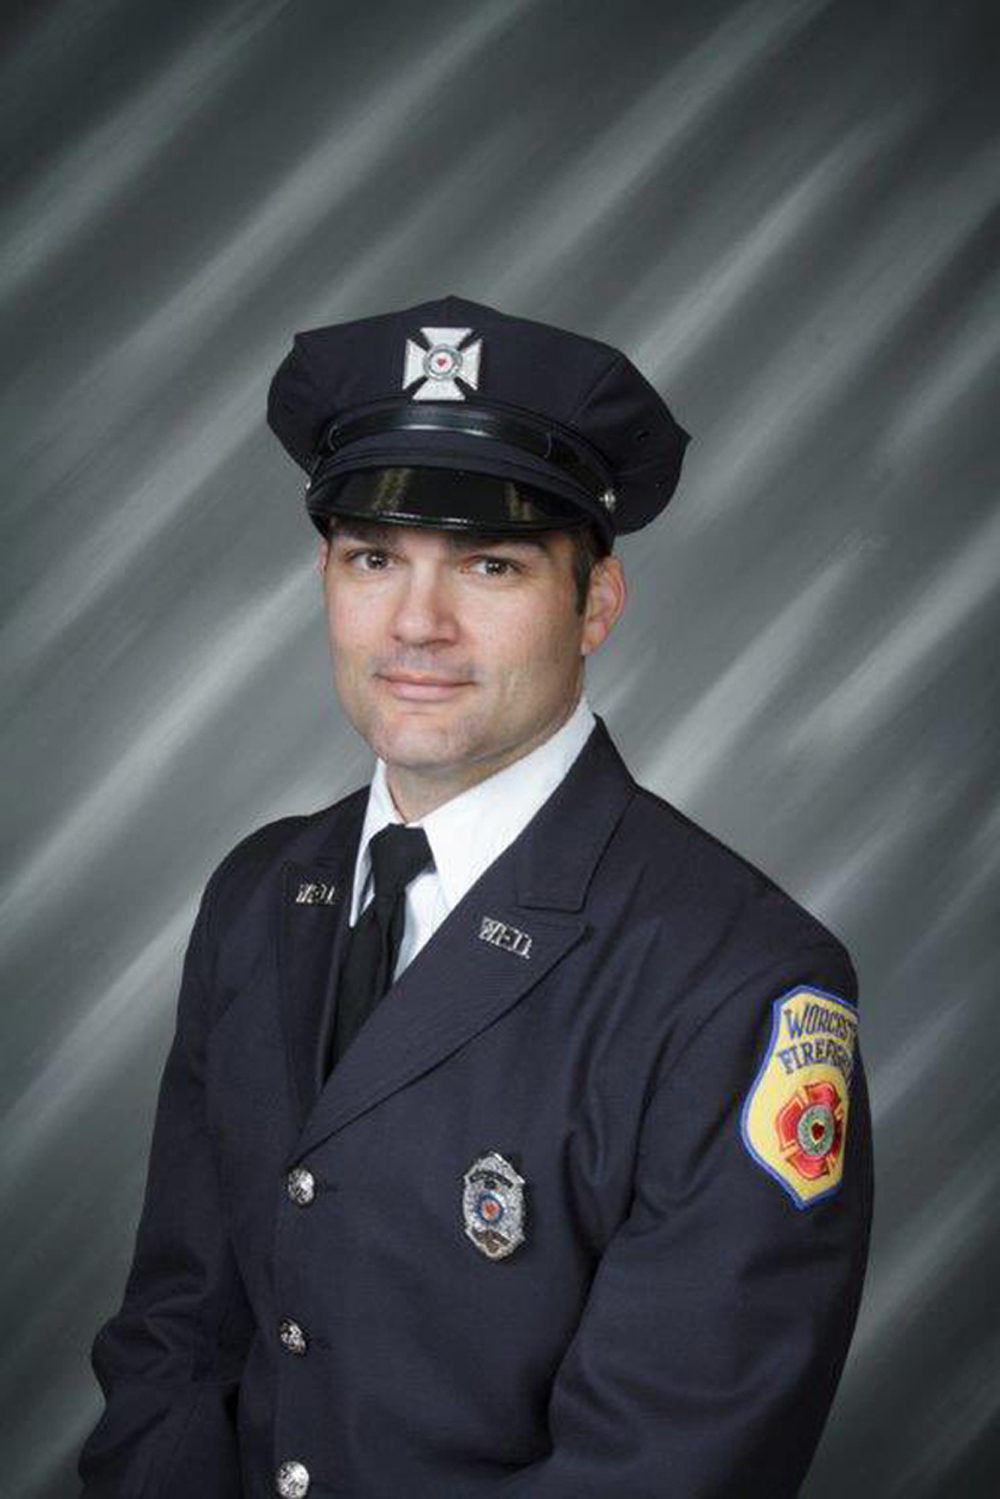 Lt. Jason Menard. (Courtesy of Worcester Fire Department)Lt. Jason Menard. (Courtesy of Worcester Fire Department)